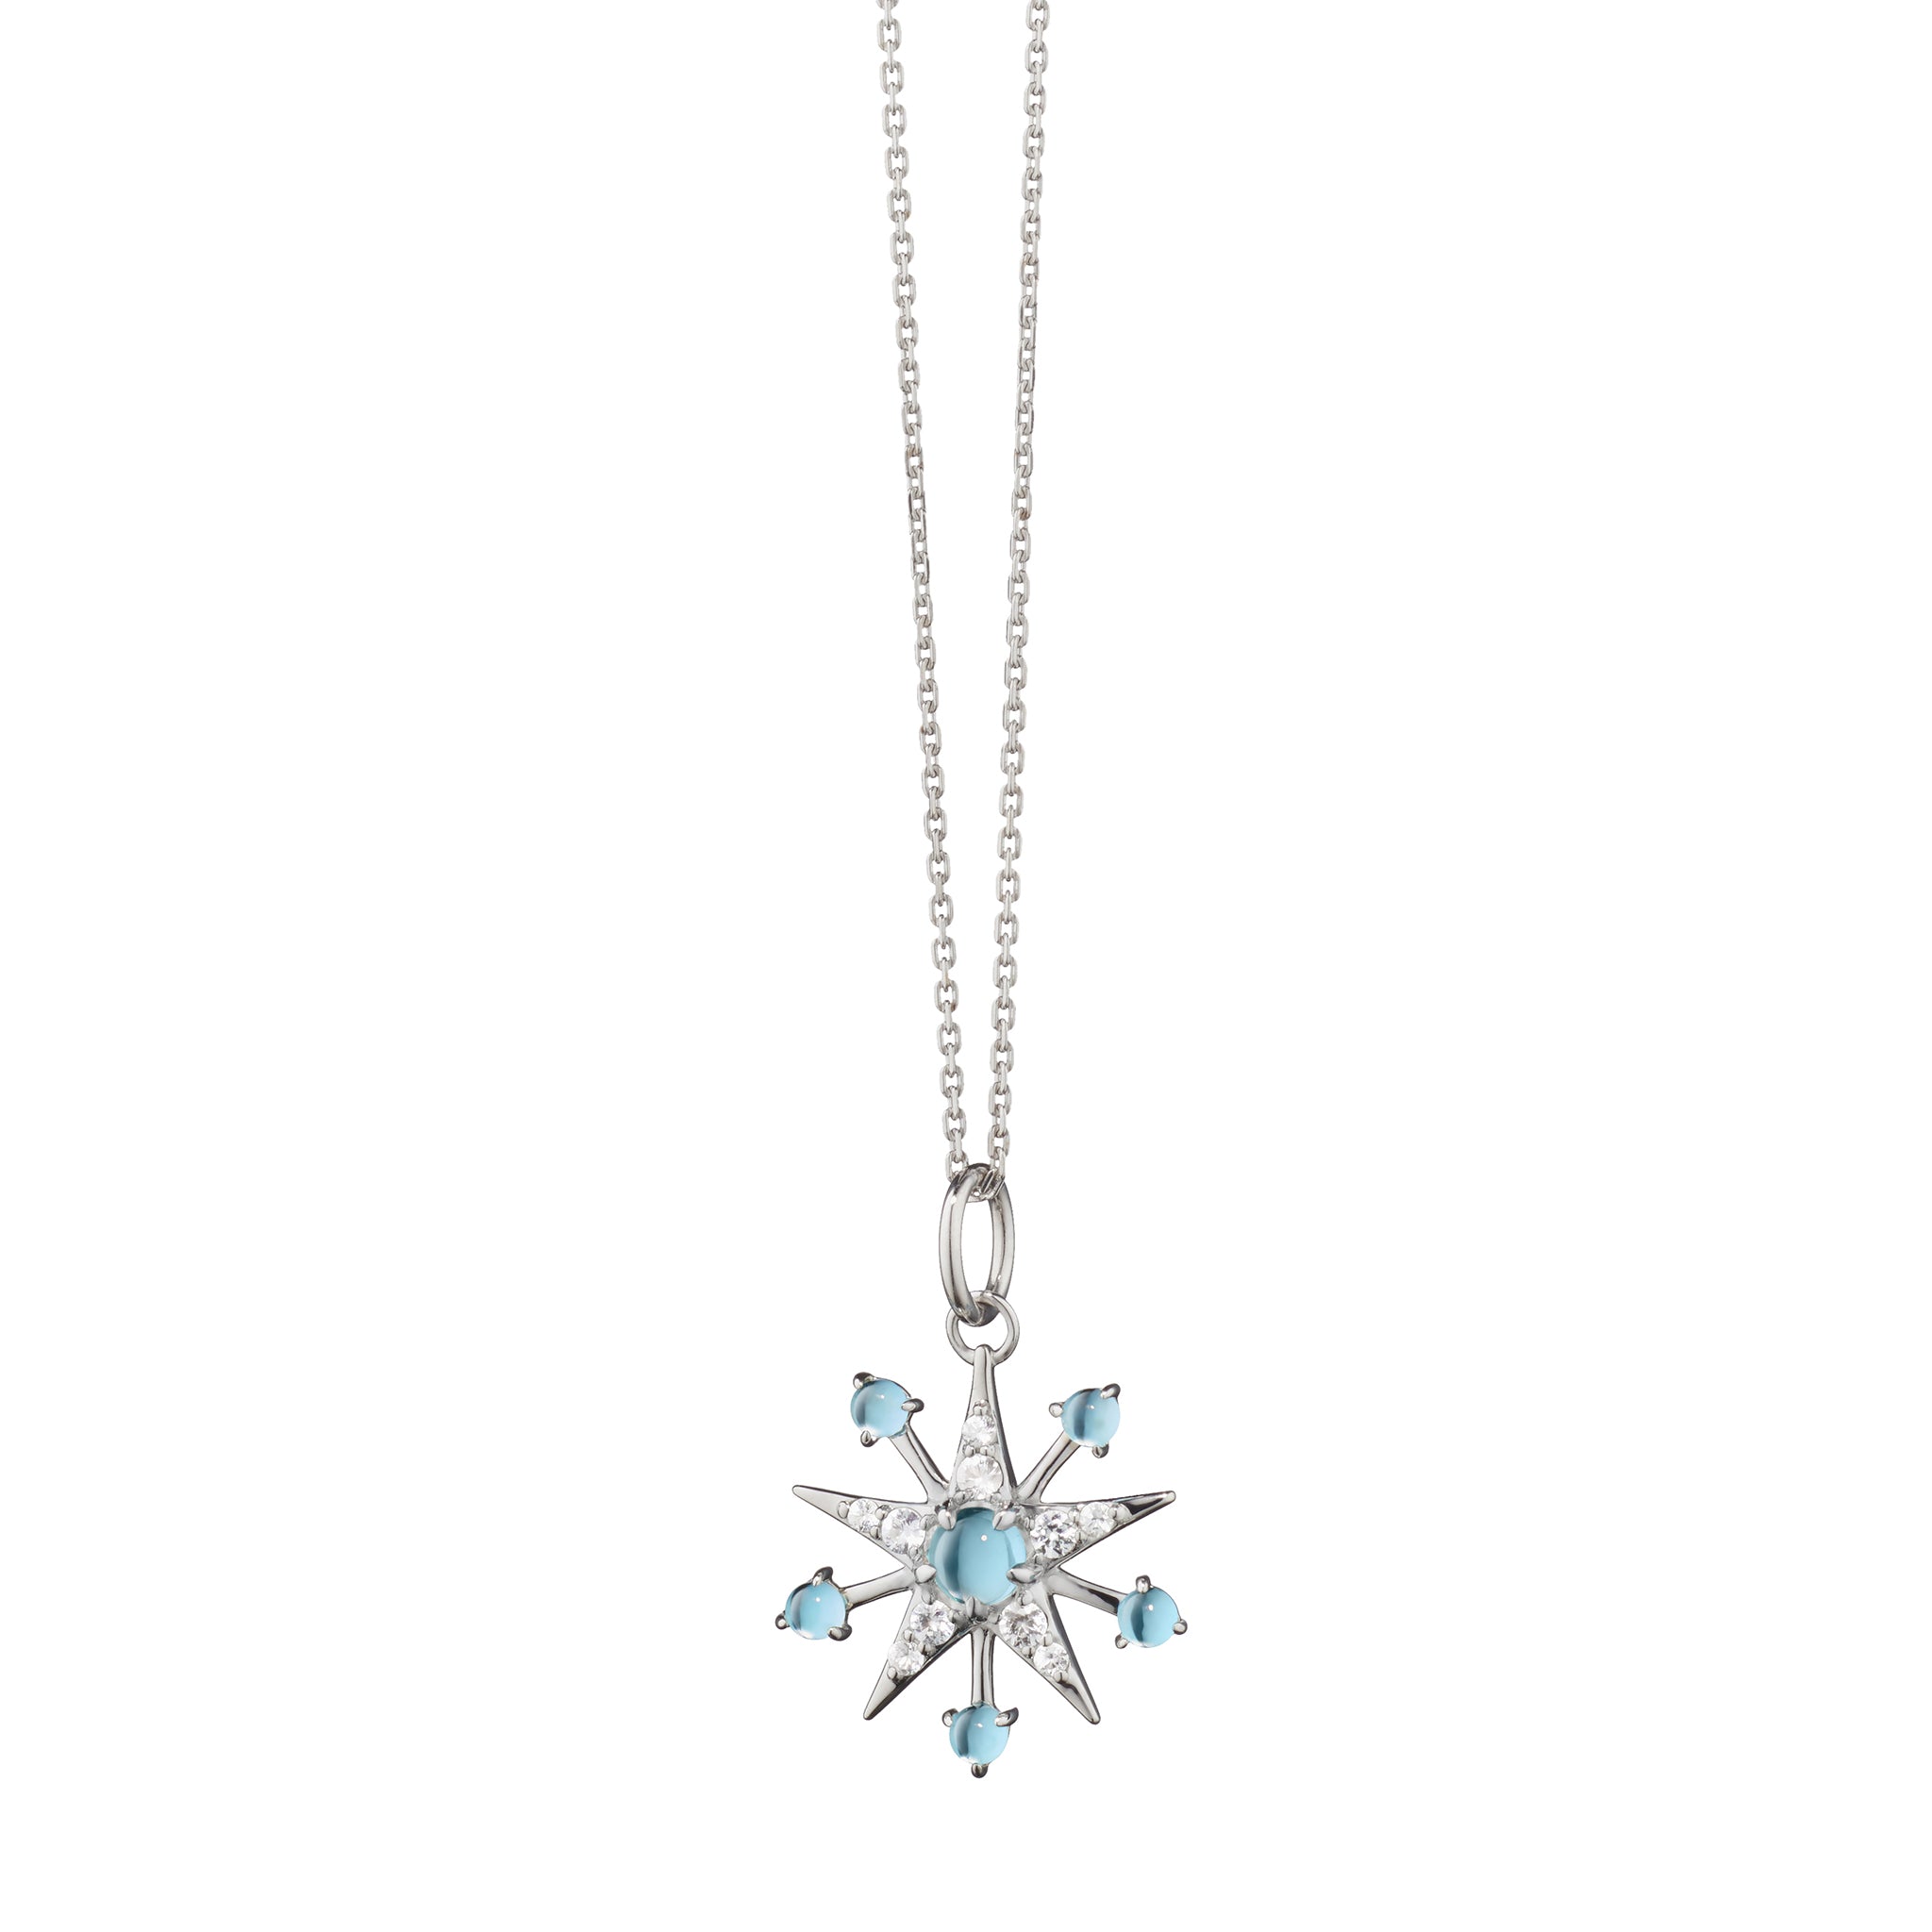 Winter Snowflake Topaz Silver 925 Pendant Xmas Gift - Tulle Lace Openwork  Design - Shop RealizedStudio Artisan Jewelry Necklaces - Pinkoi